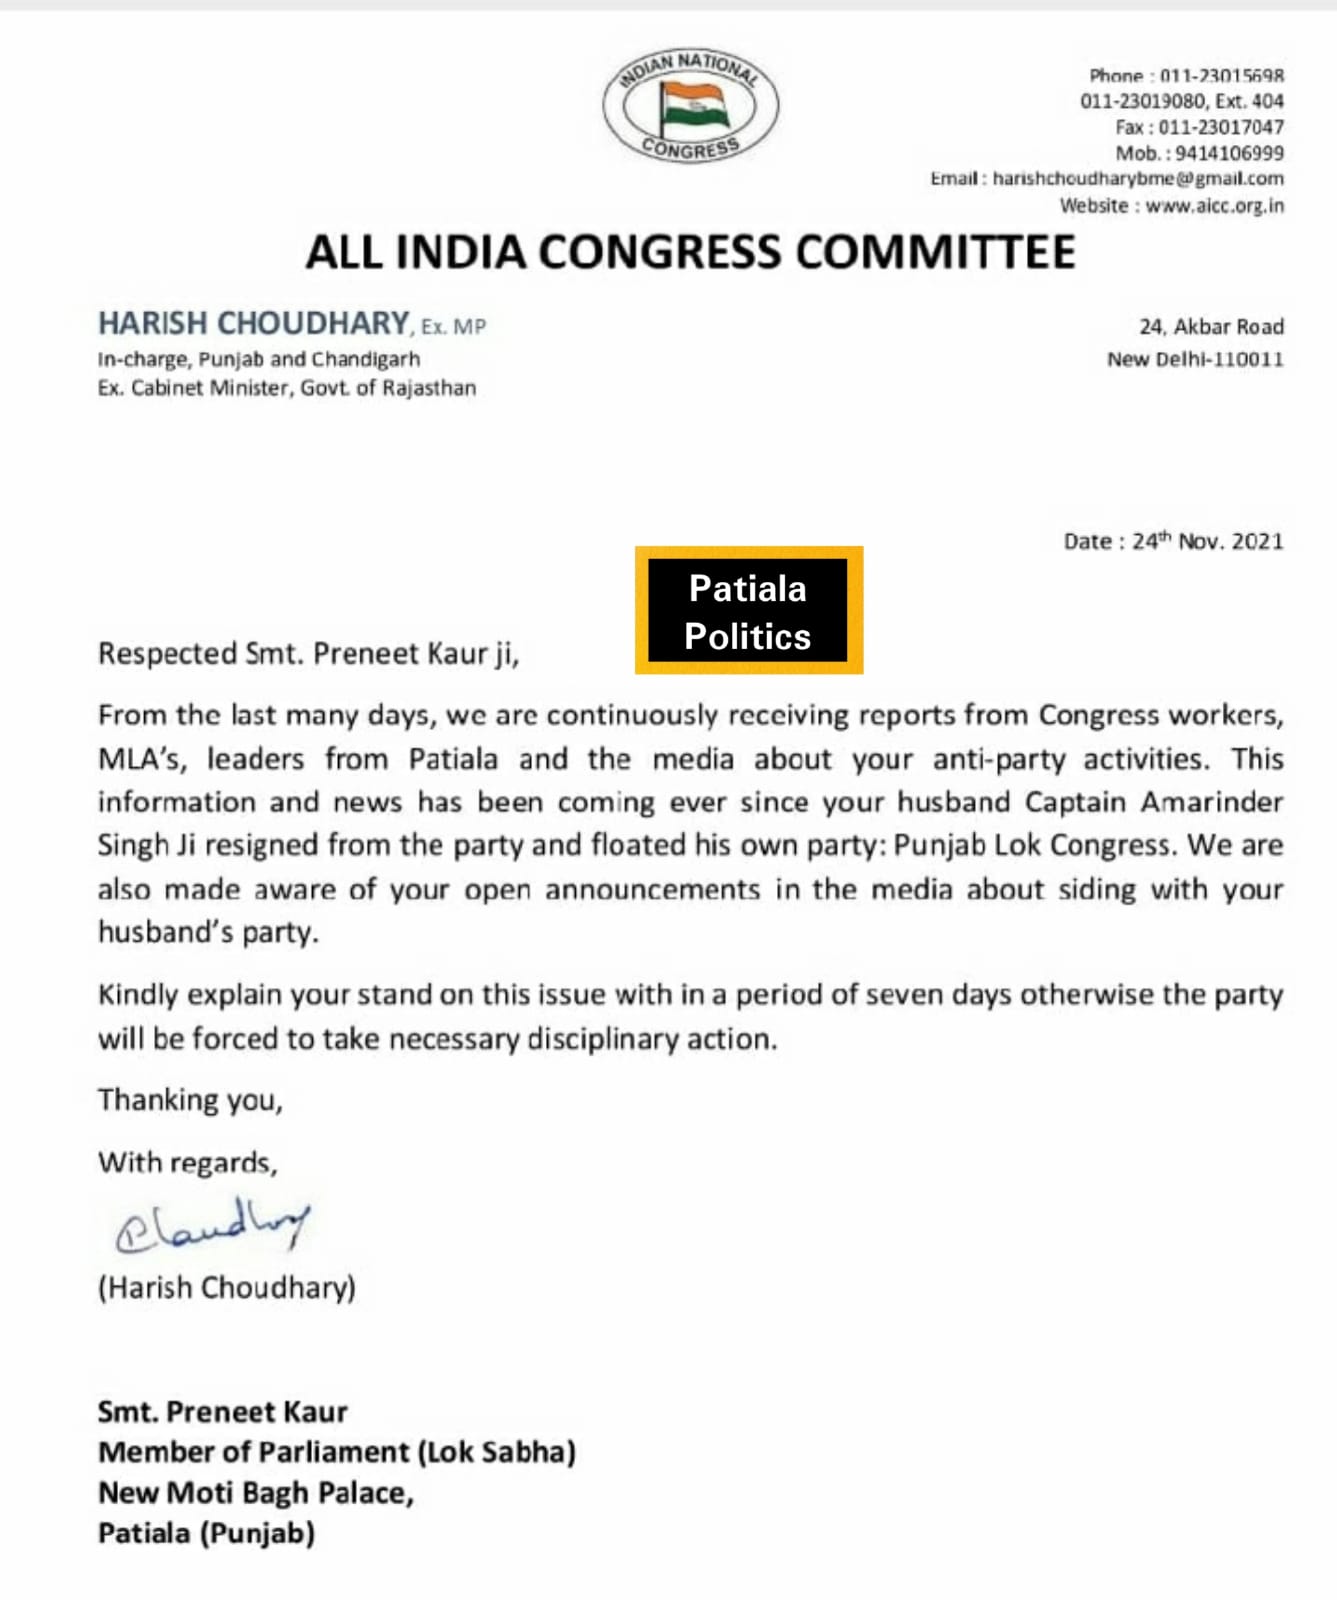 Show cause notice to MP Patiala Preneet Kaur